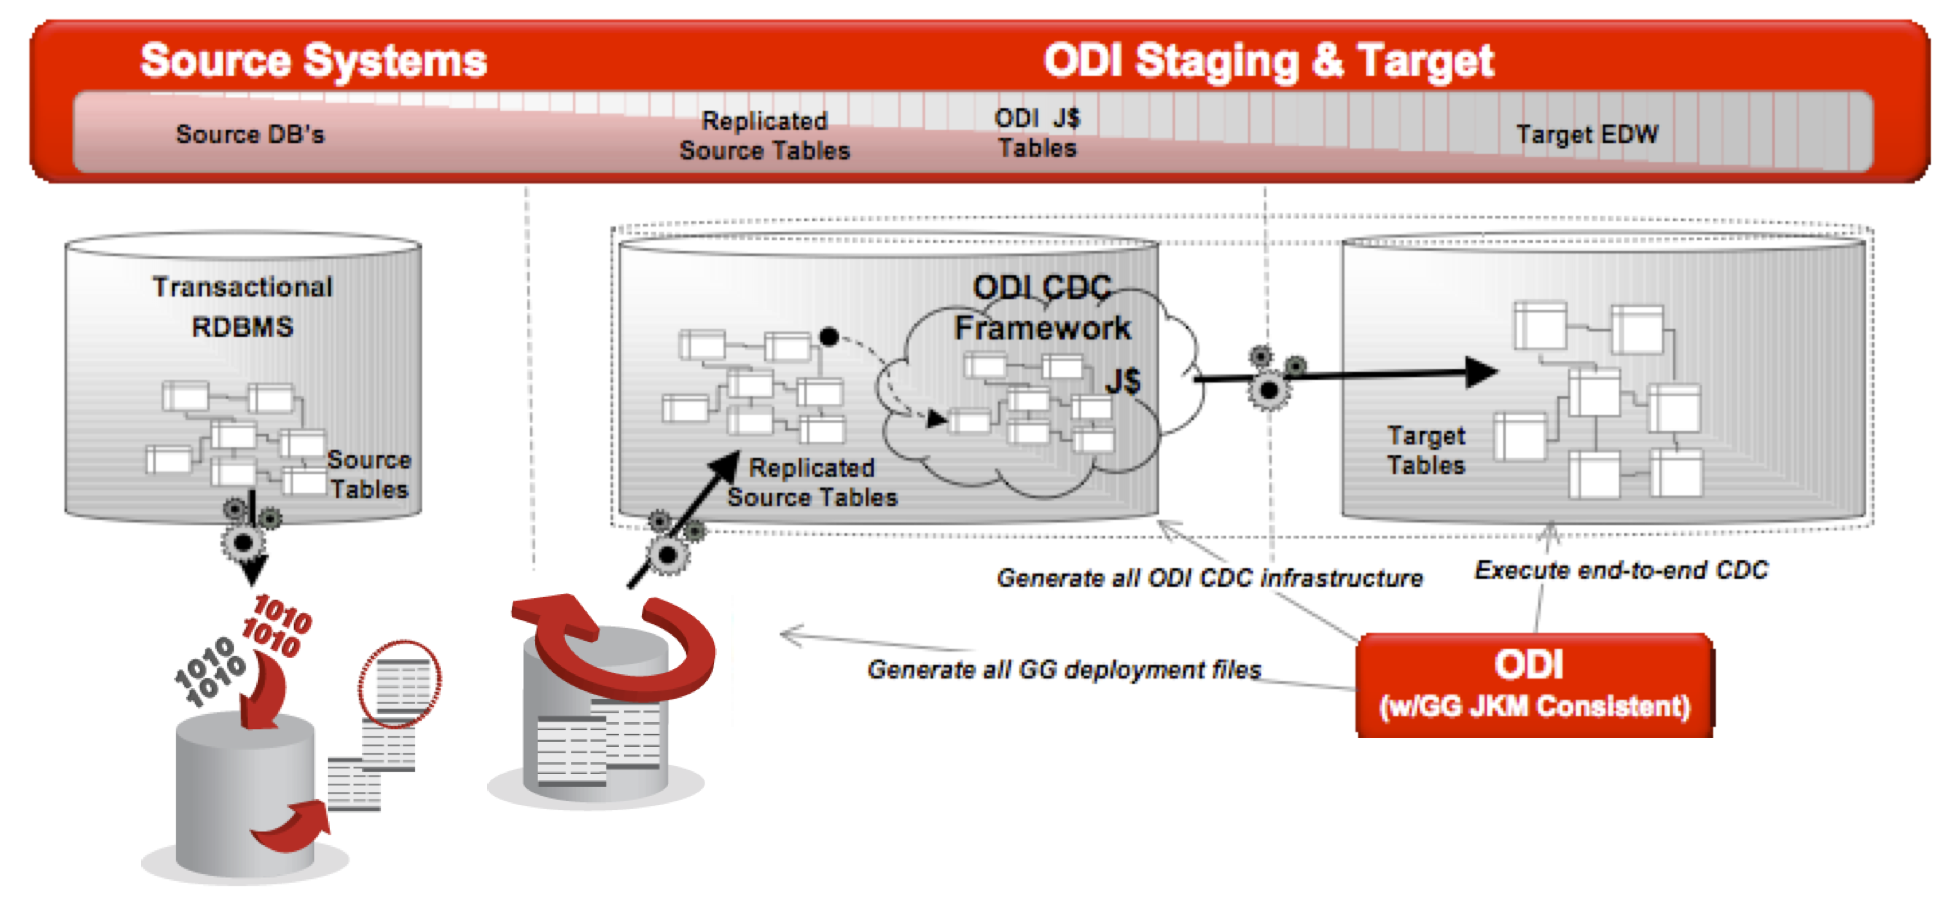 GoldenGate and ODI Integration